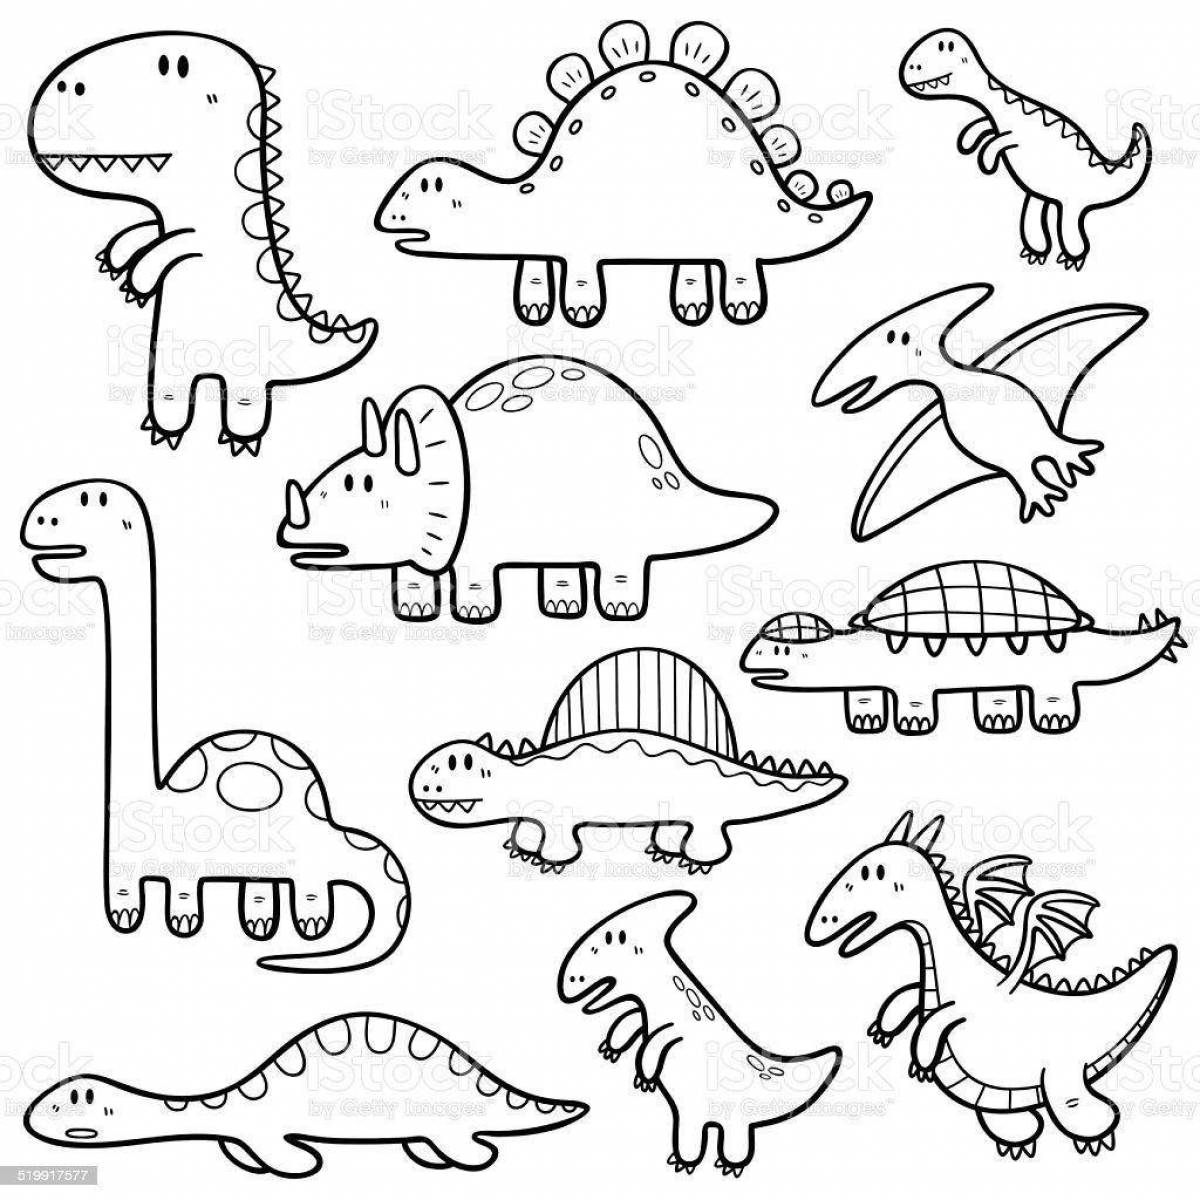 Live cute dinosaur coloring book